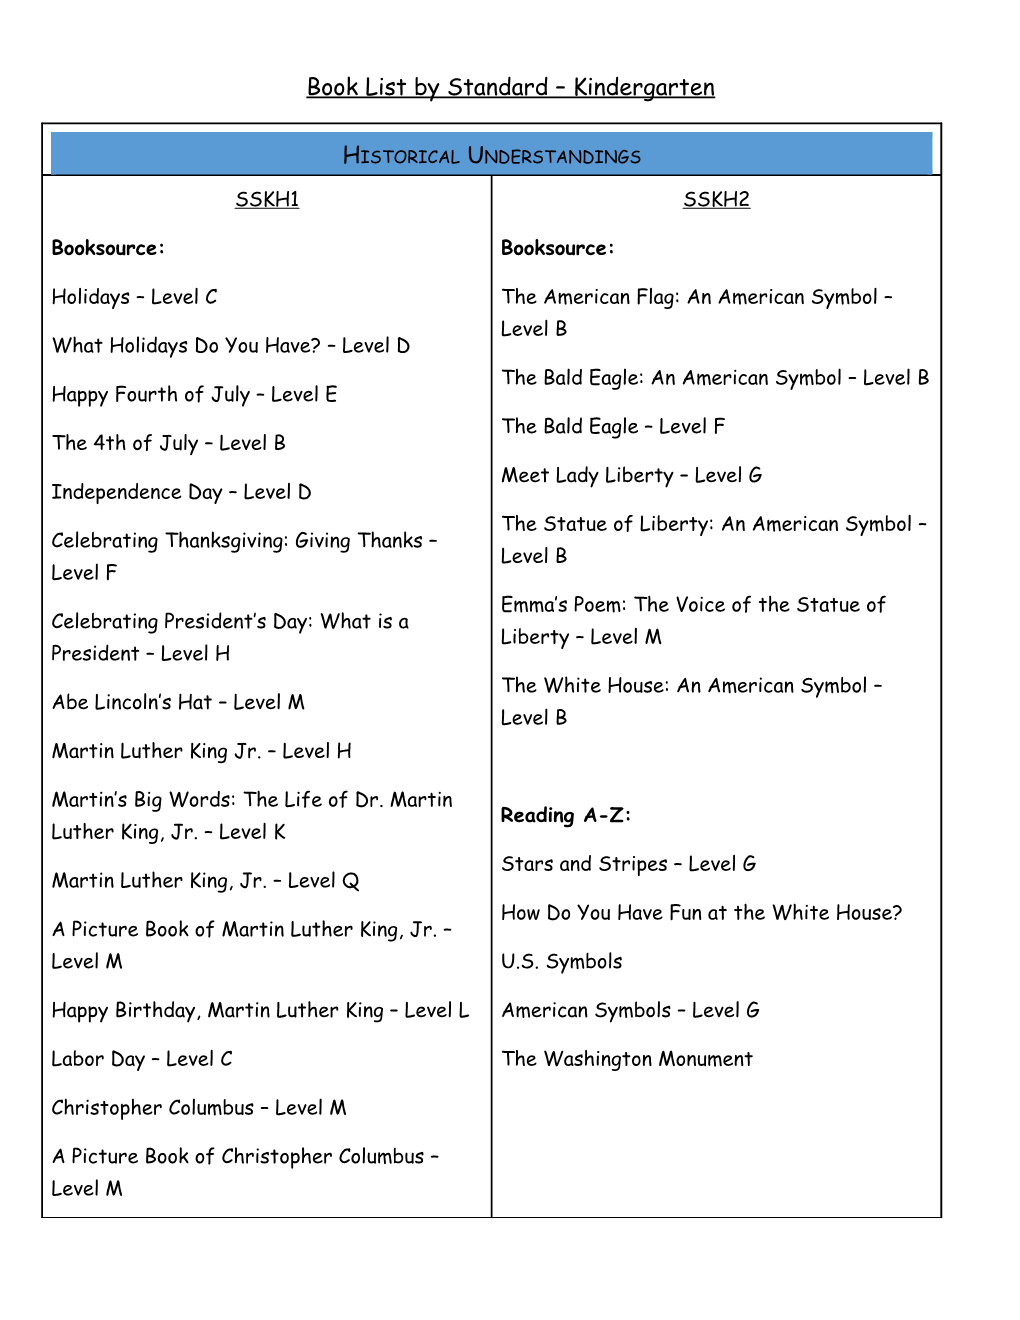 Book List by Standard Kindergarten